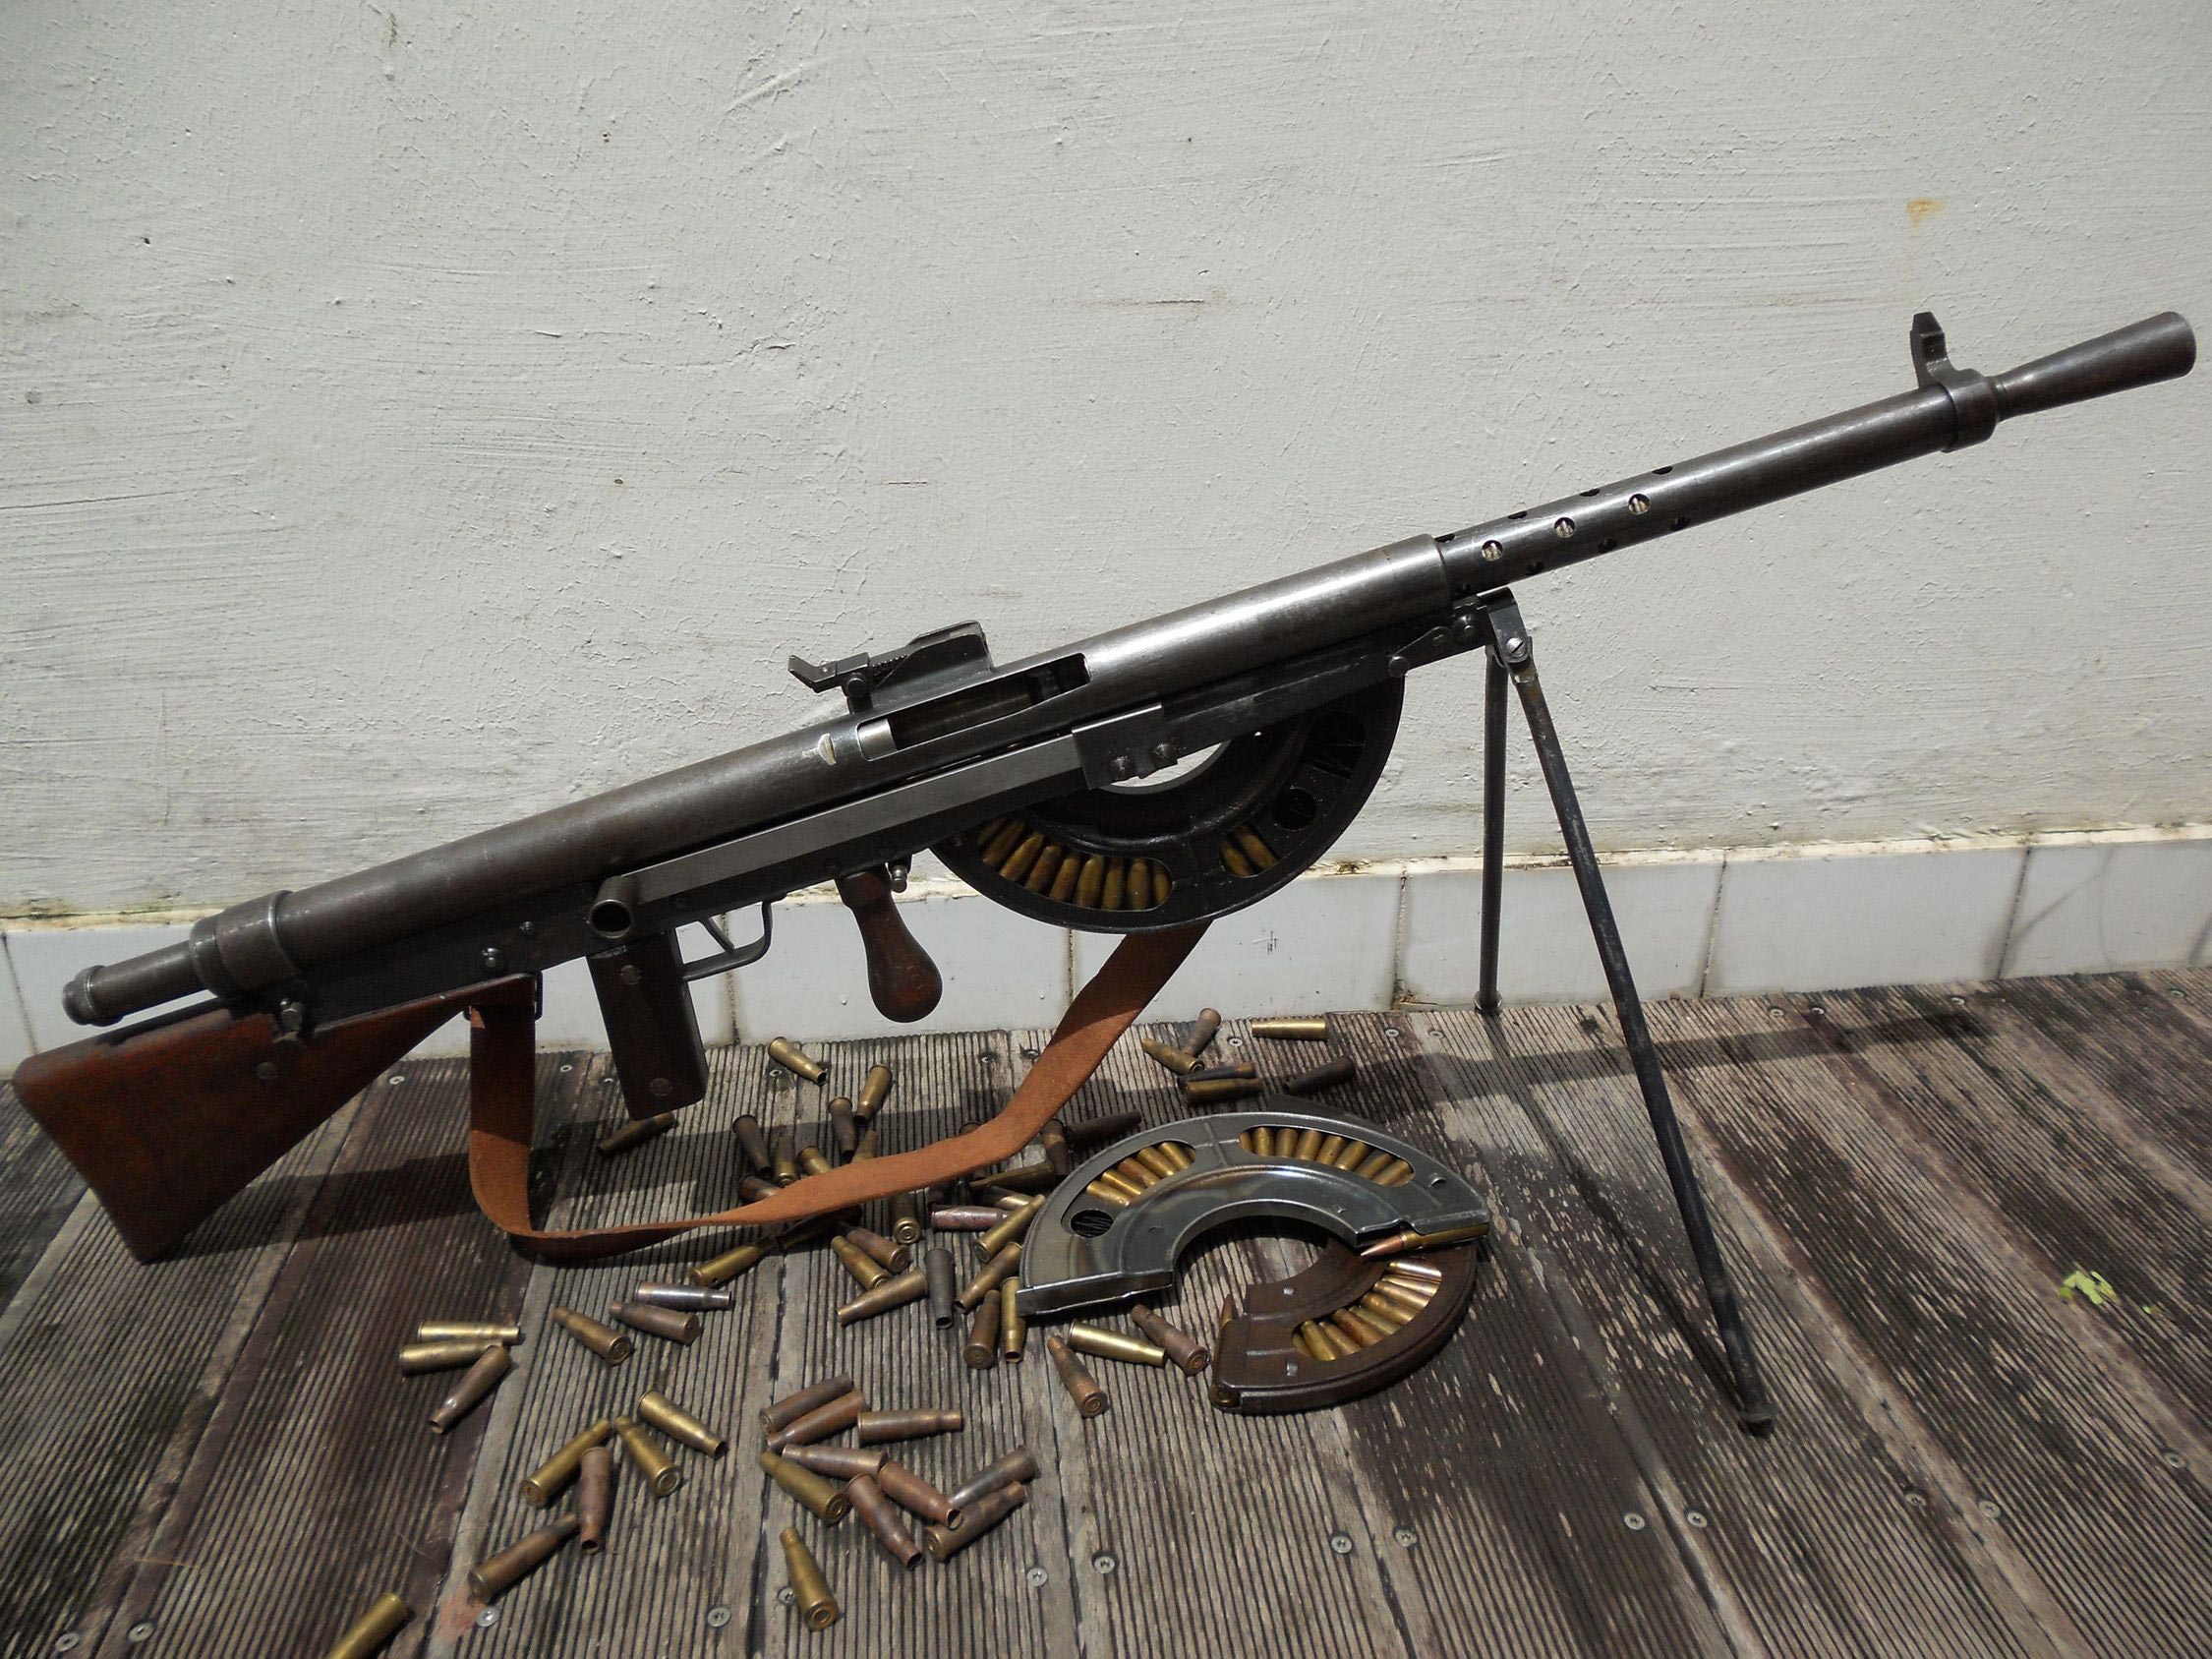 MG 42通用机枪，据说在二战时候灰常厉害~ - 普象网